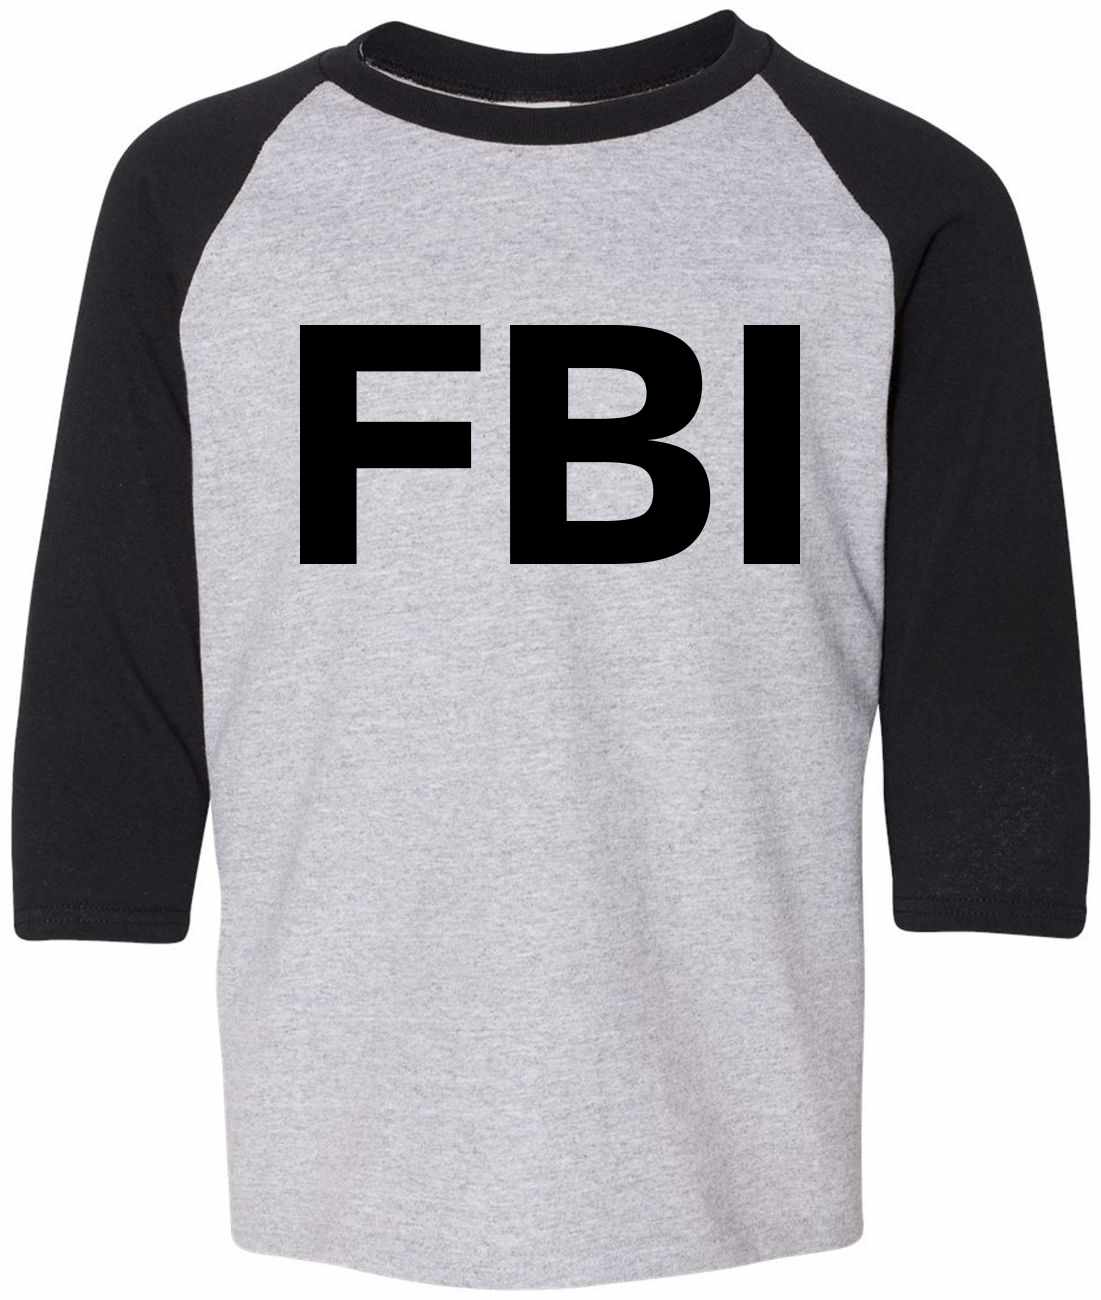 FBI on Youth Baseball Shirt